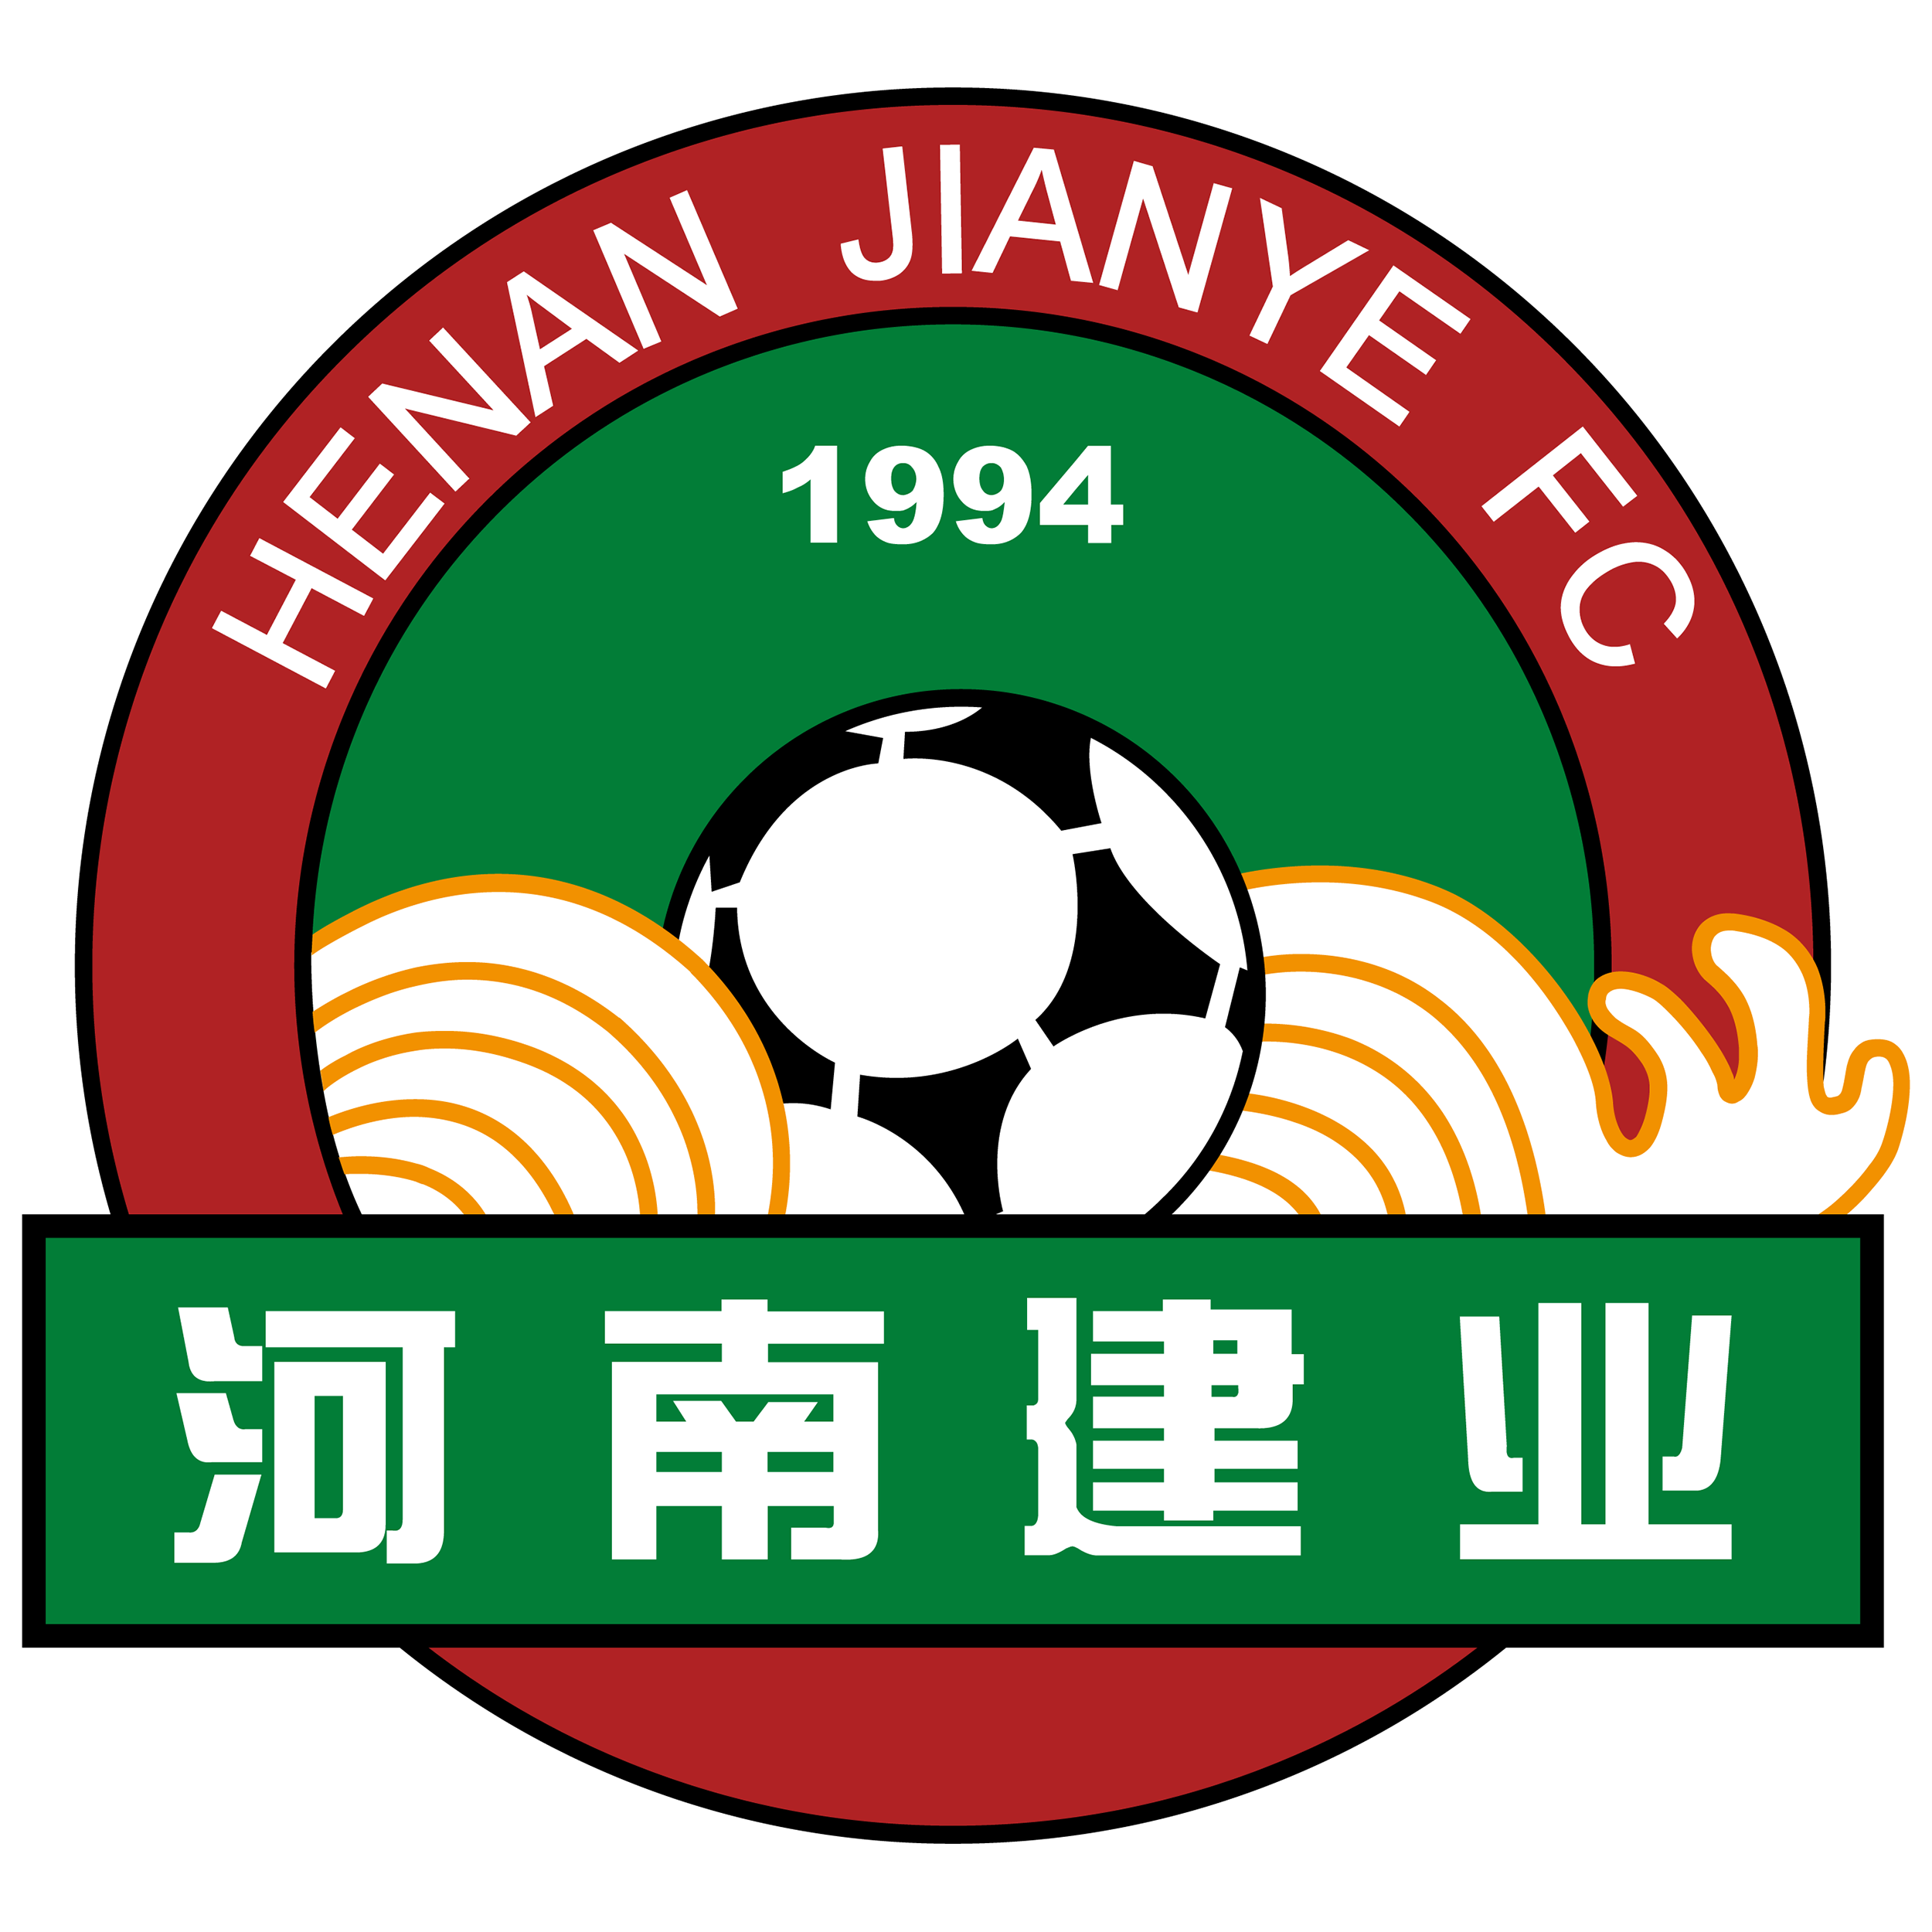 Henan Jianye vs Beijing Guoan Prediction: Tough Match Between Two Equally Matched Sides.